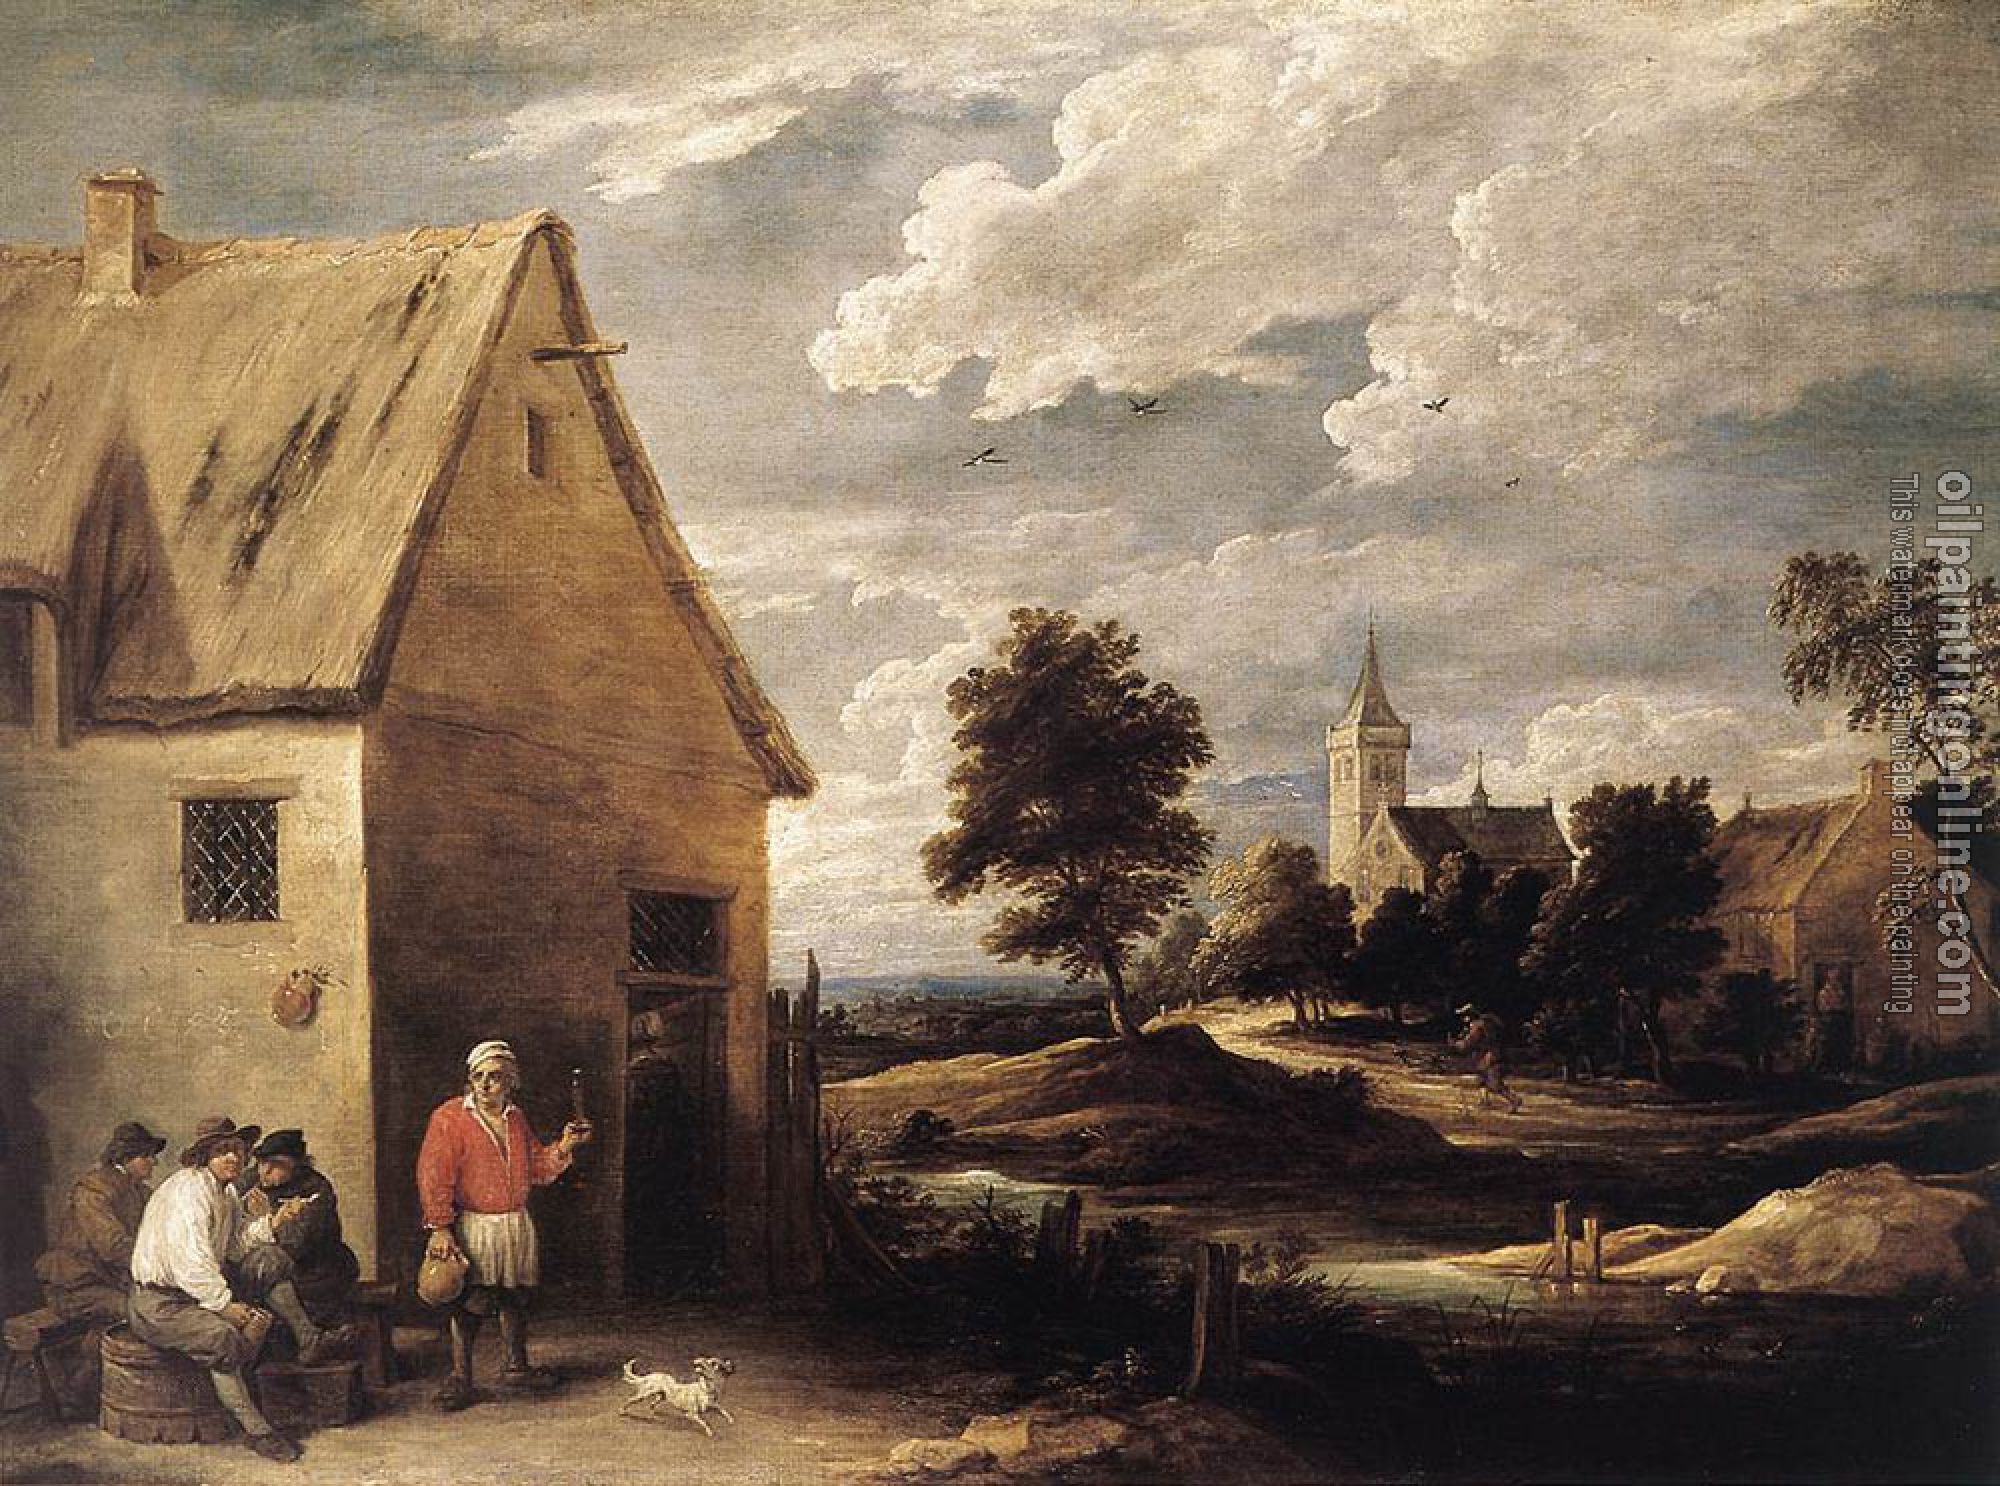 David Teniers the Younger - Village Scene